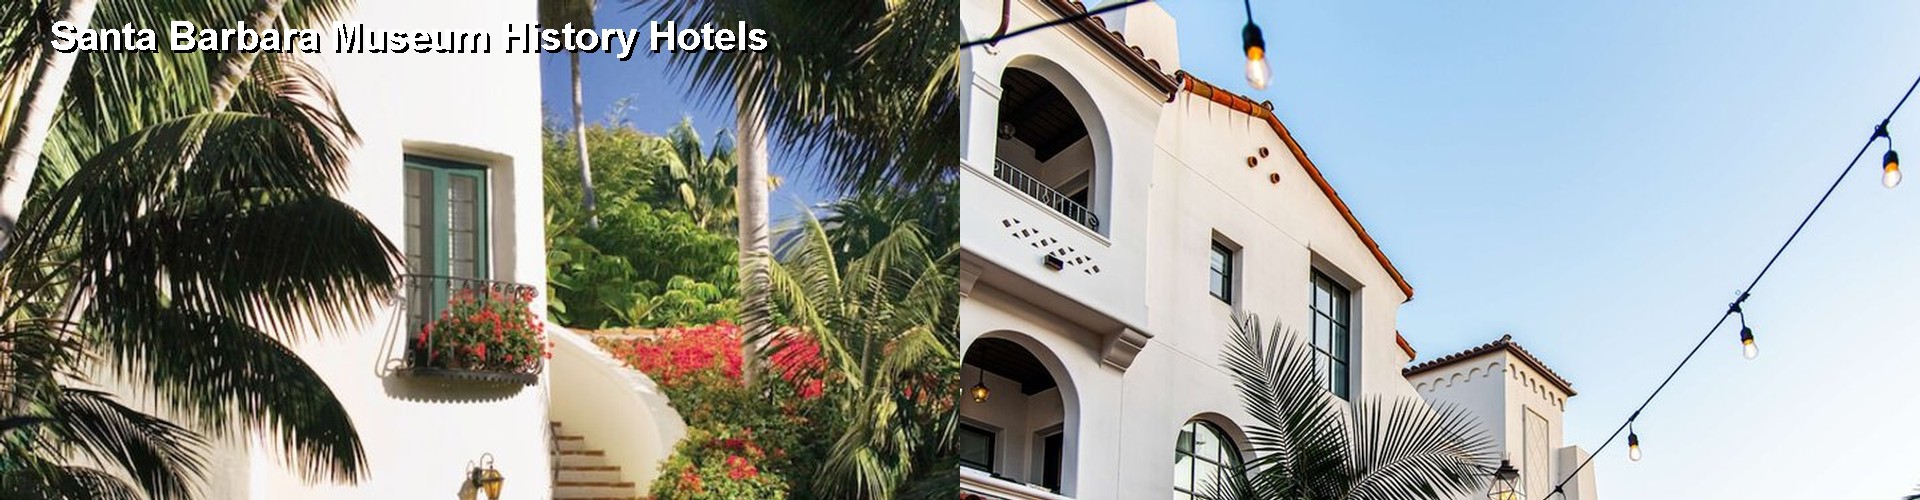 5 Best Hotels near Santa Barbara Museum History